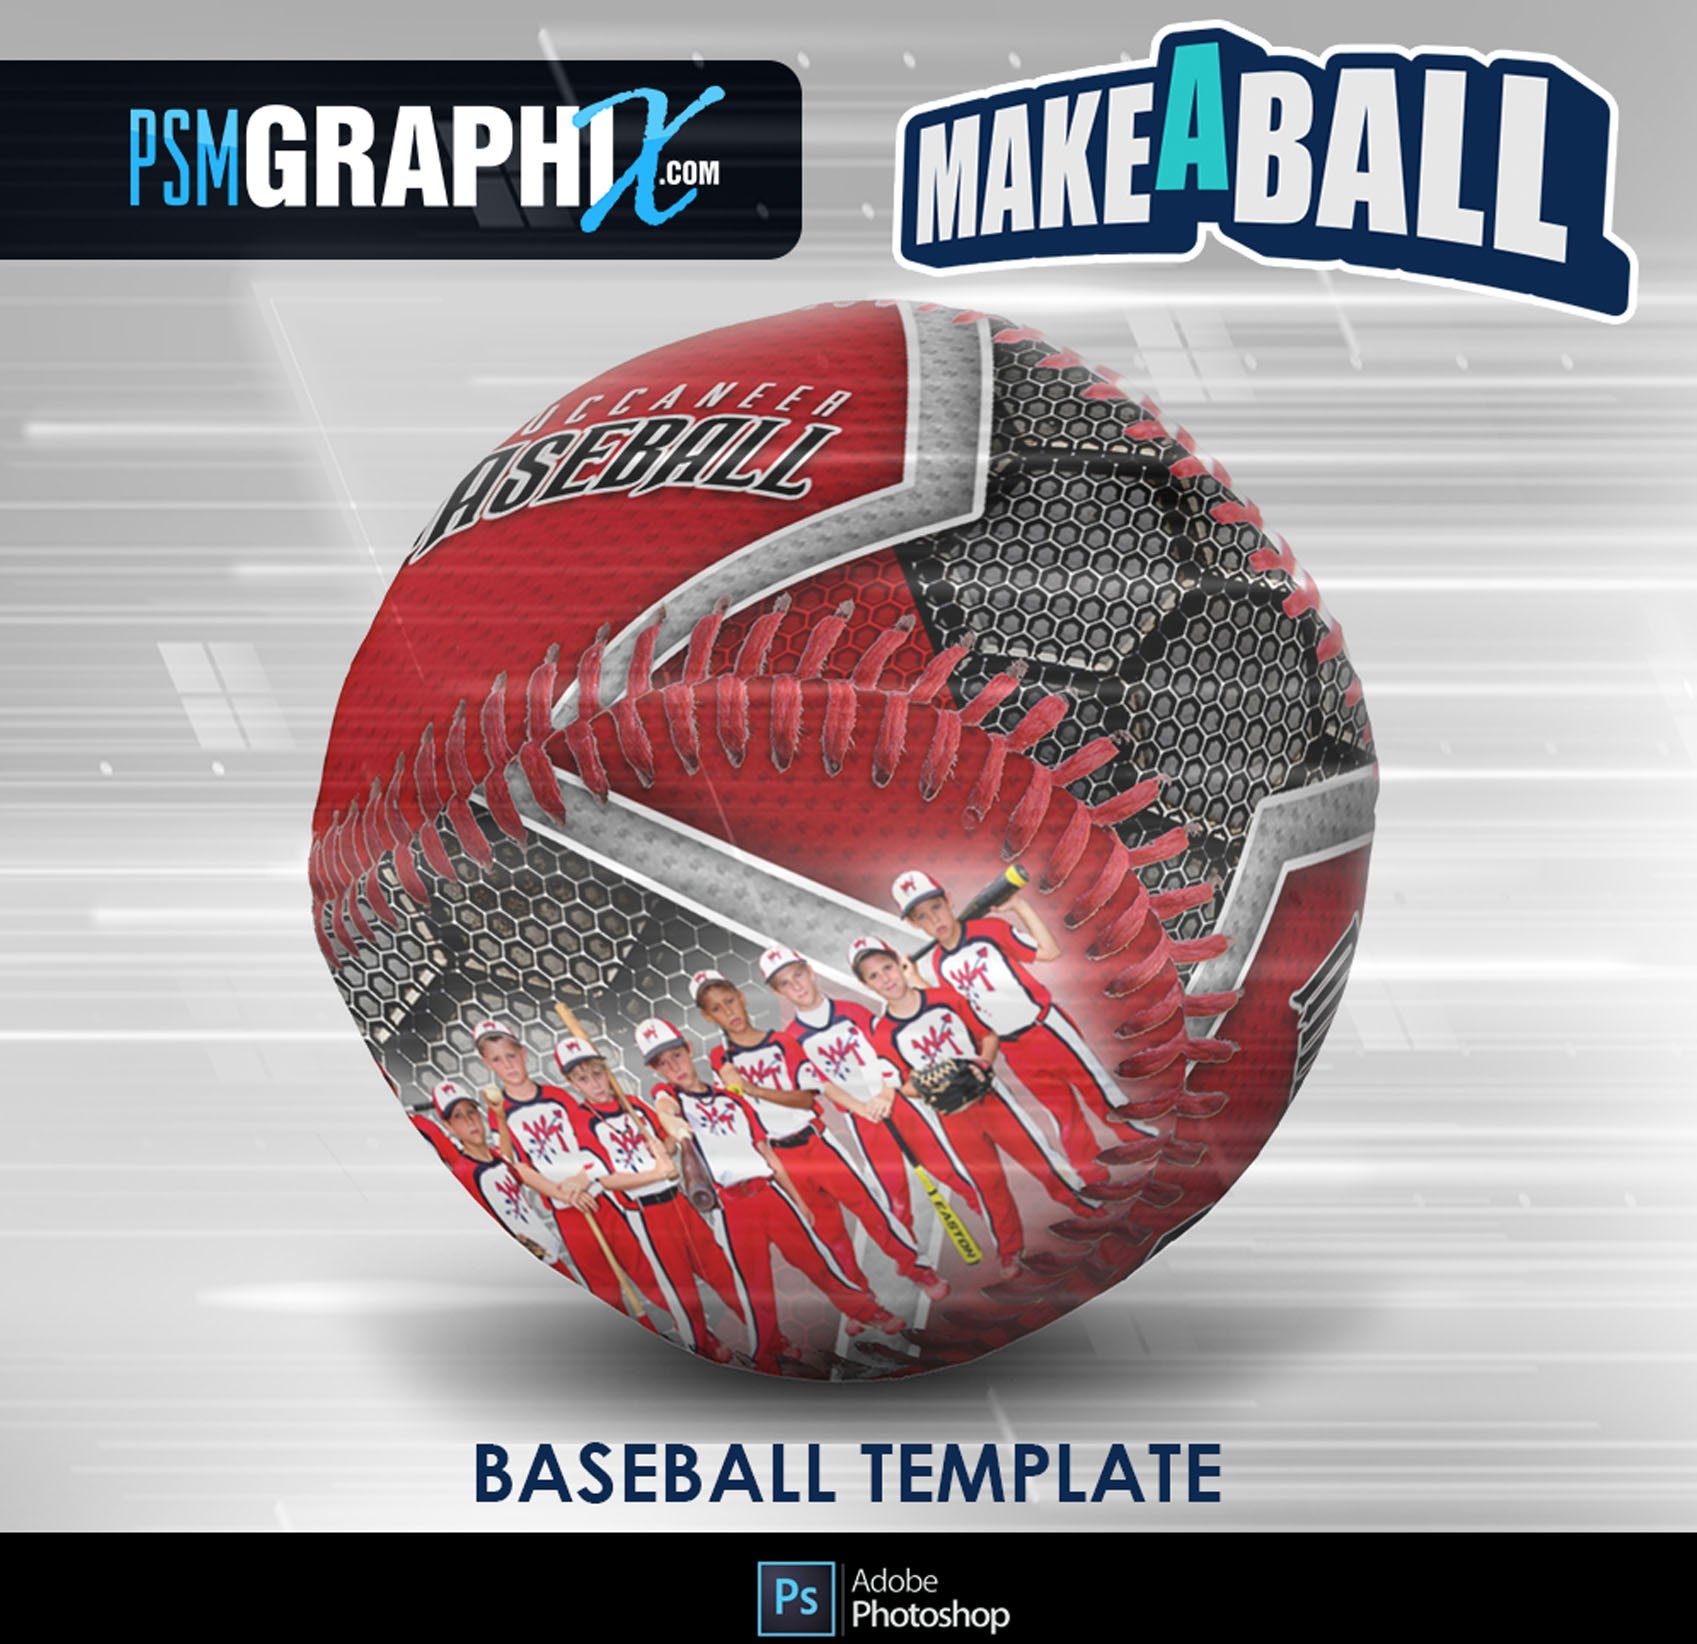 Honeycomb - V.1 - Baseball - Make-A-Ball Photoshop Template-Photoshop Template - PSMGraphix